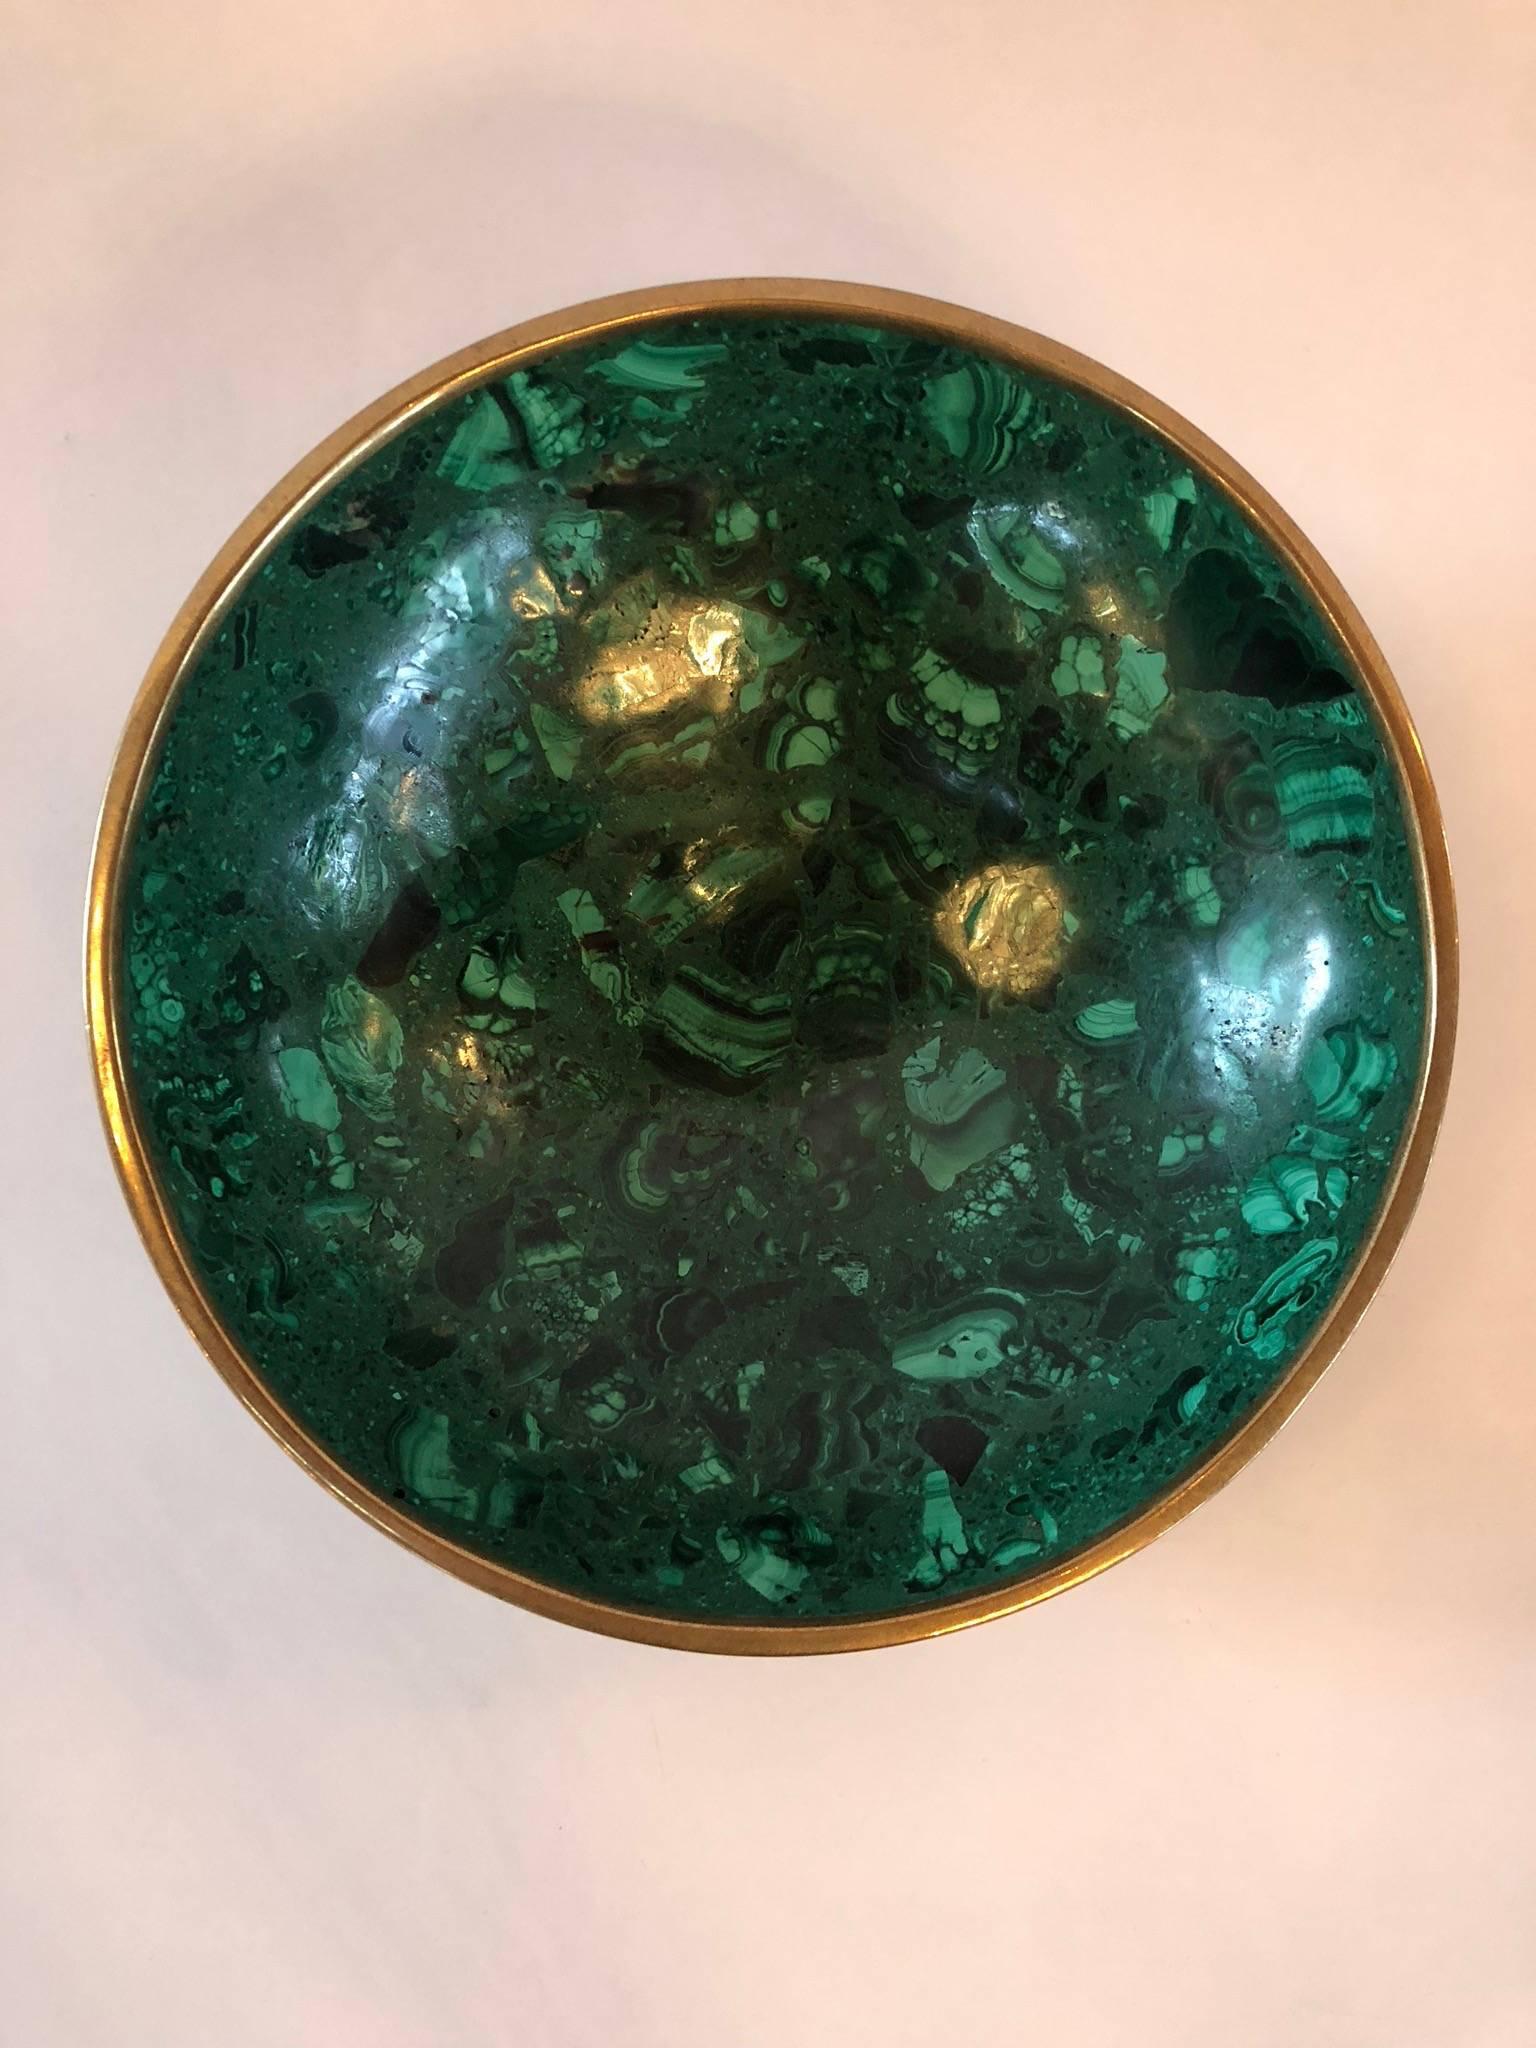 Green malachite bowl with gold rim. Measures: 7